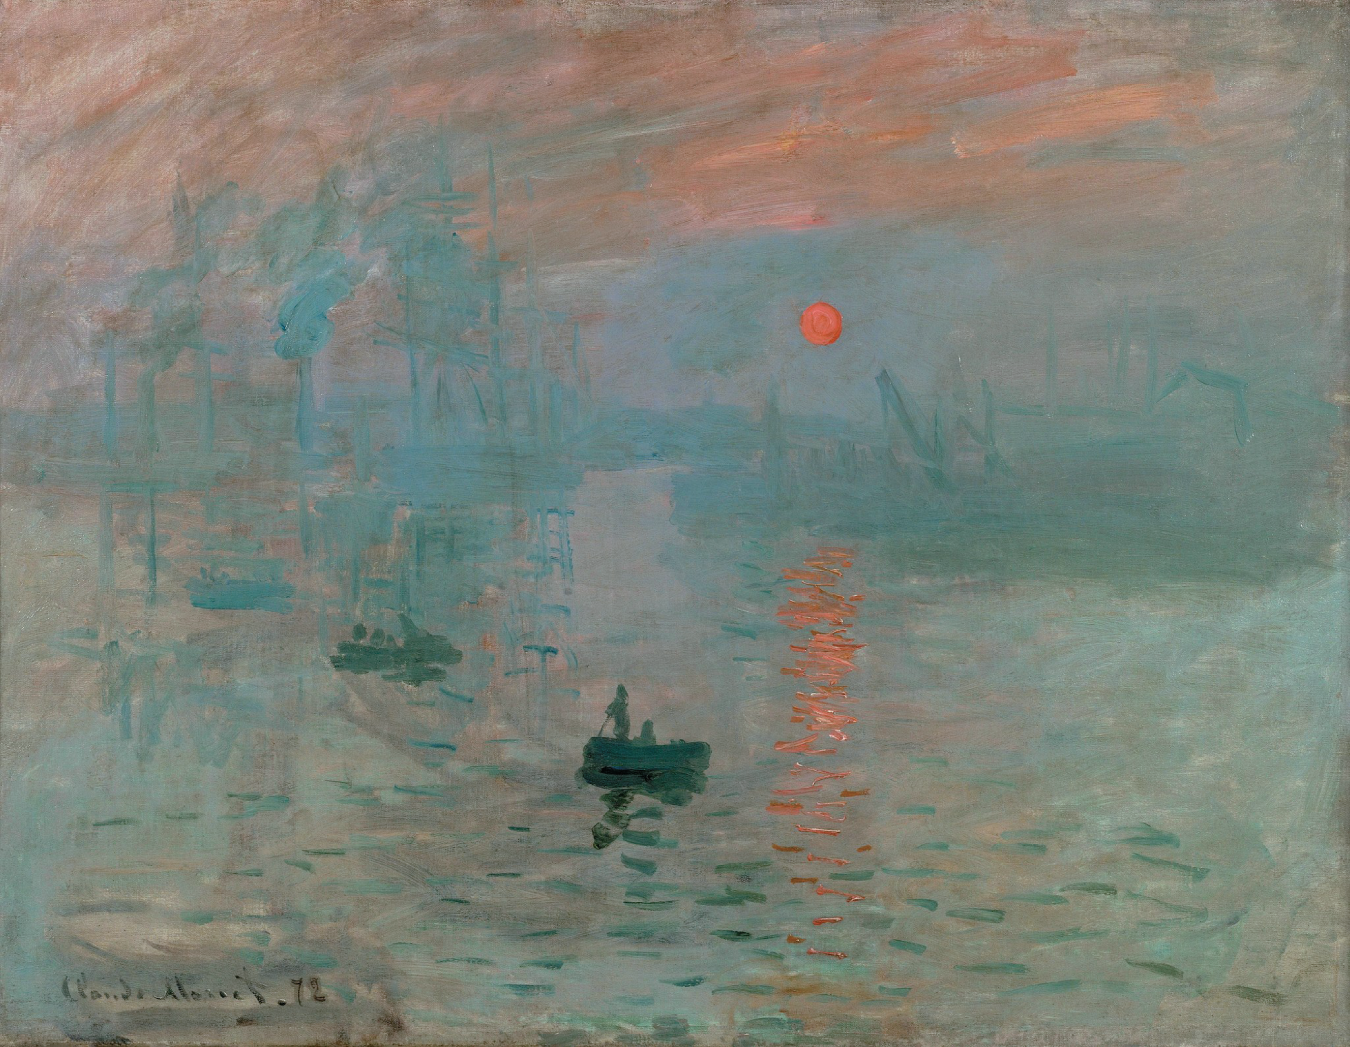 Photo depicts impression, Sunrise by Claude Monet